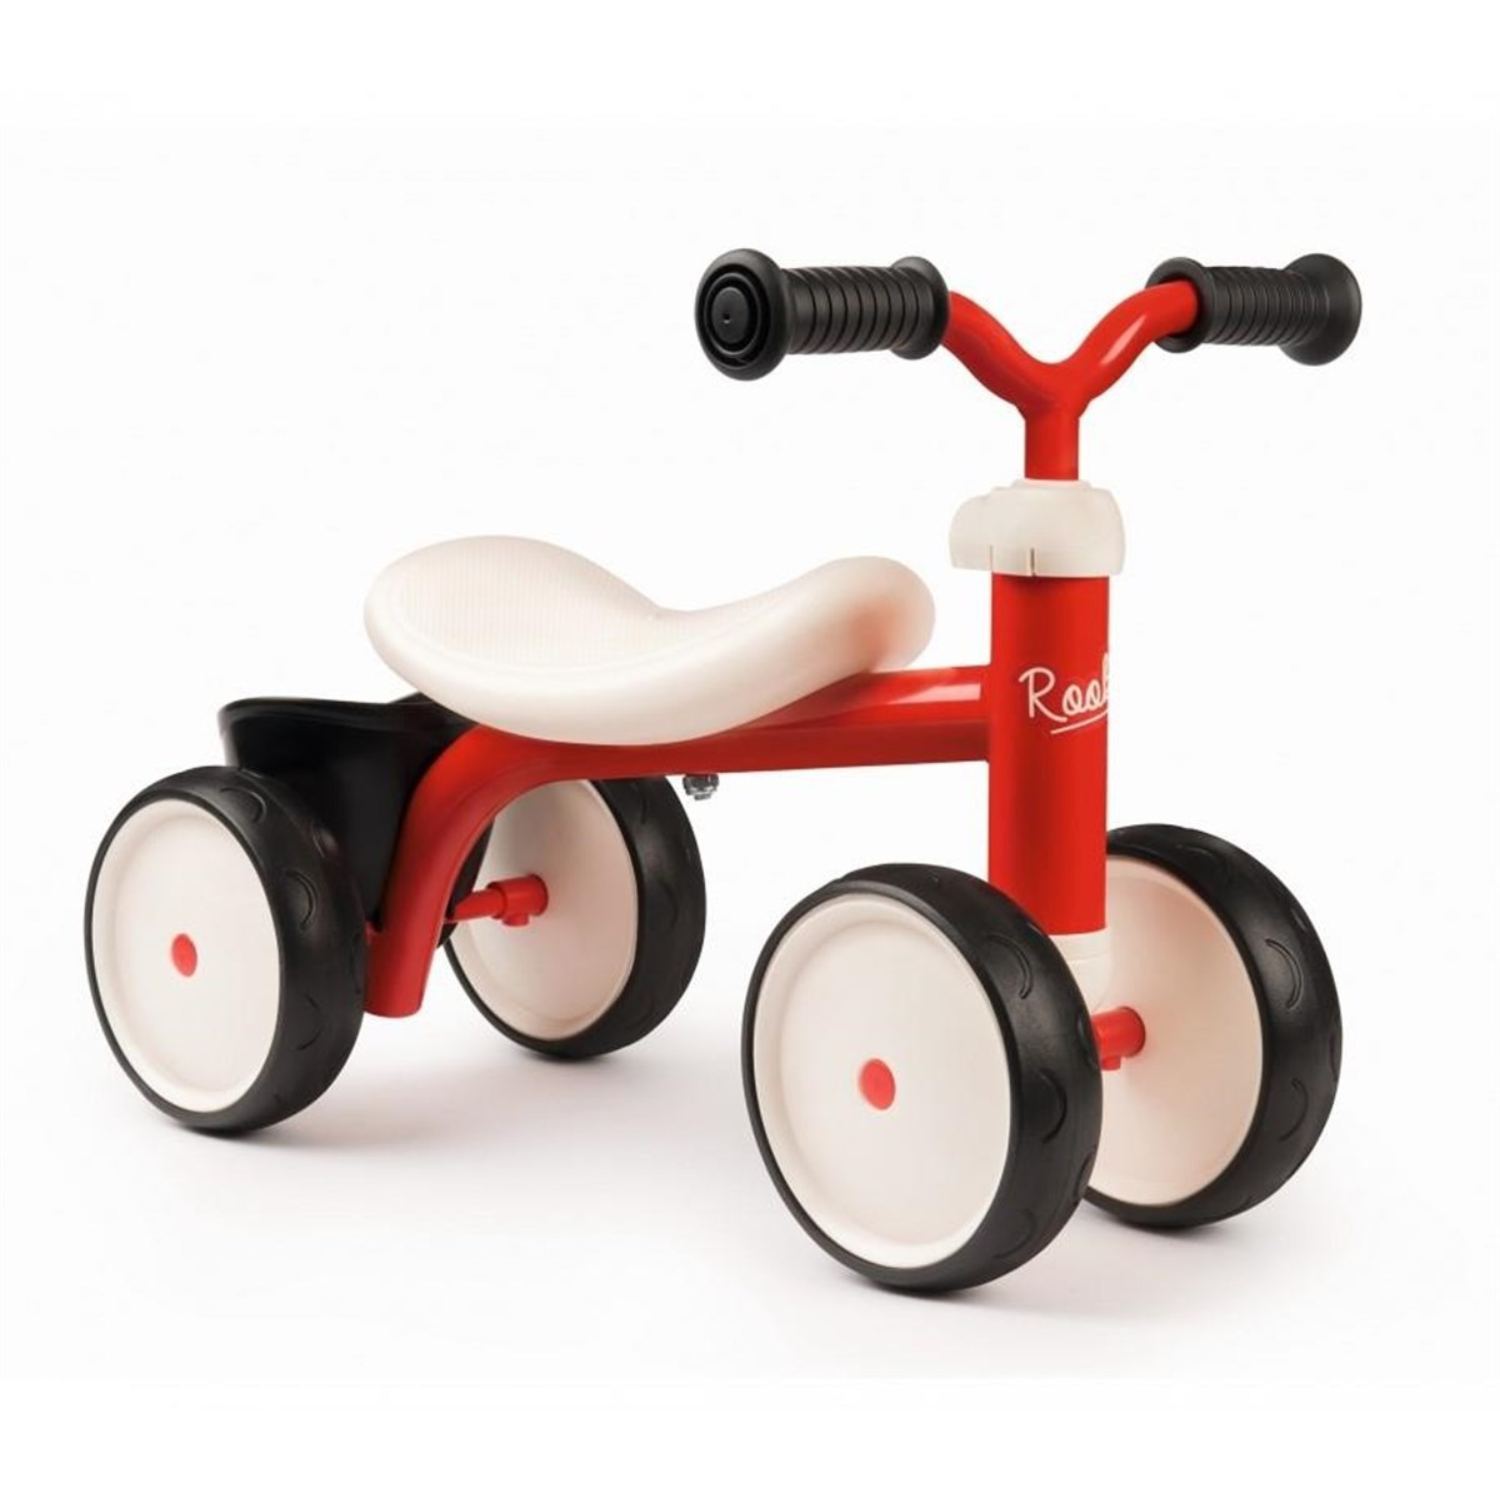 Smoby Rookie 4 Tekerlekli Bingit Bisiklet - Kırmızı 721400 | Toysall